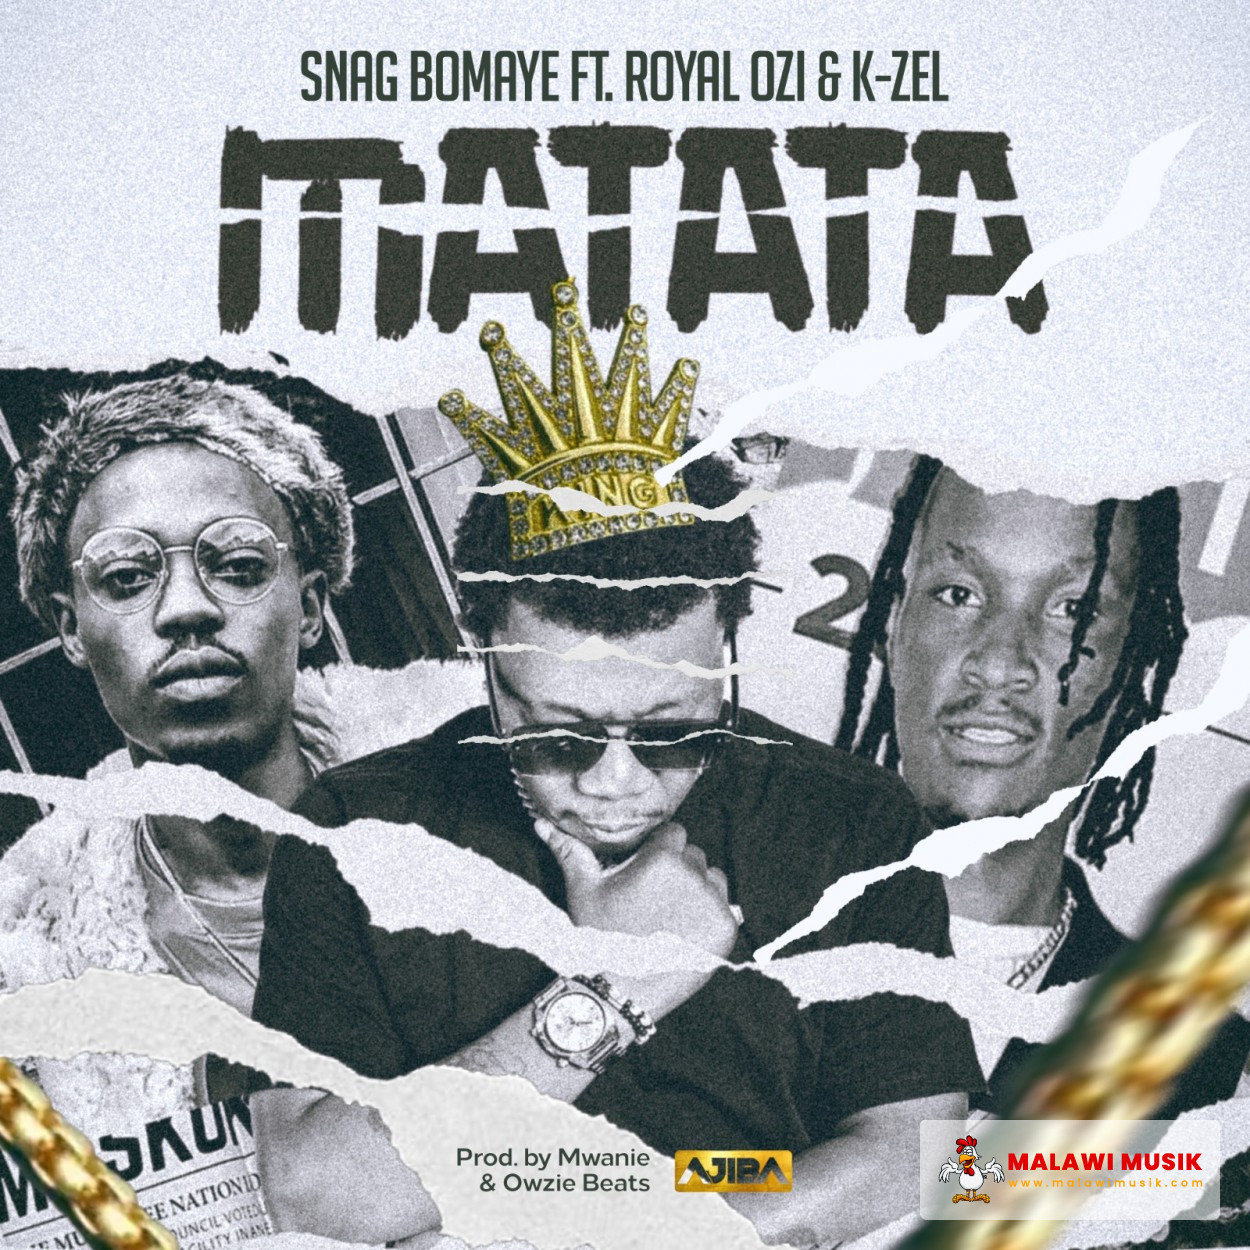 Snag Bomaye - Matata ft Royal Ozi & K-Zel (Prod. Mwanie & Owzie Beats)